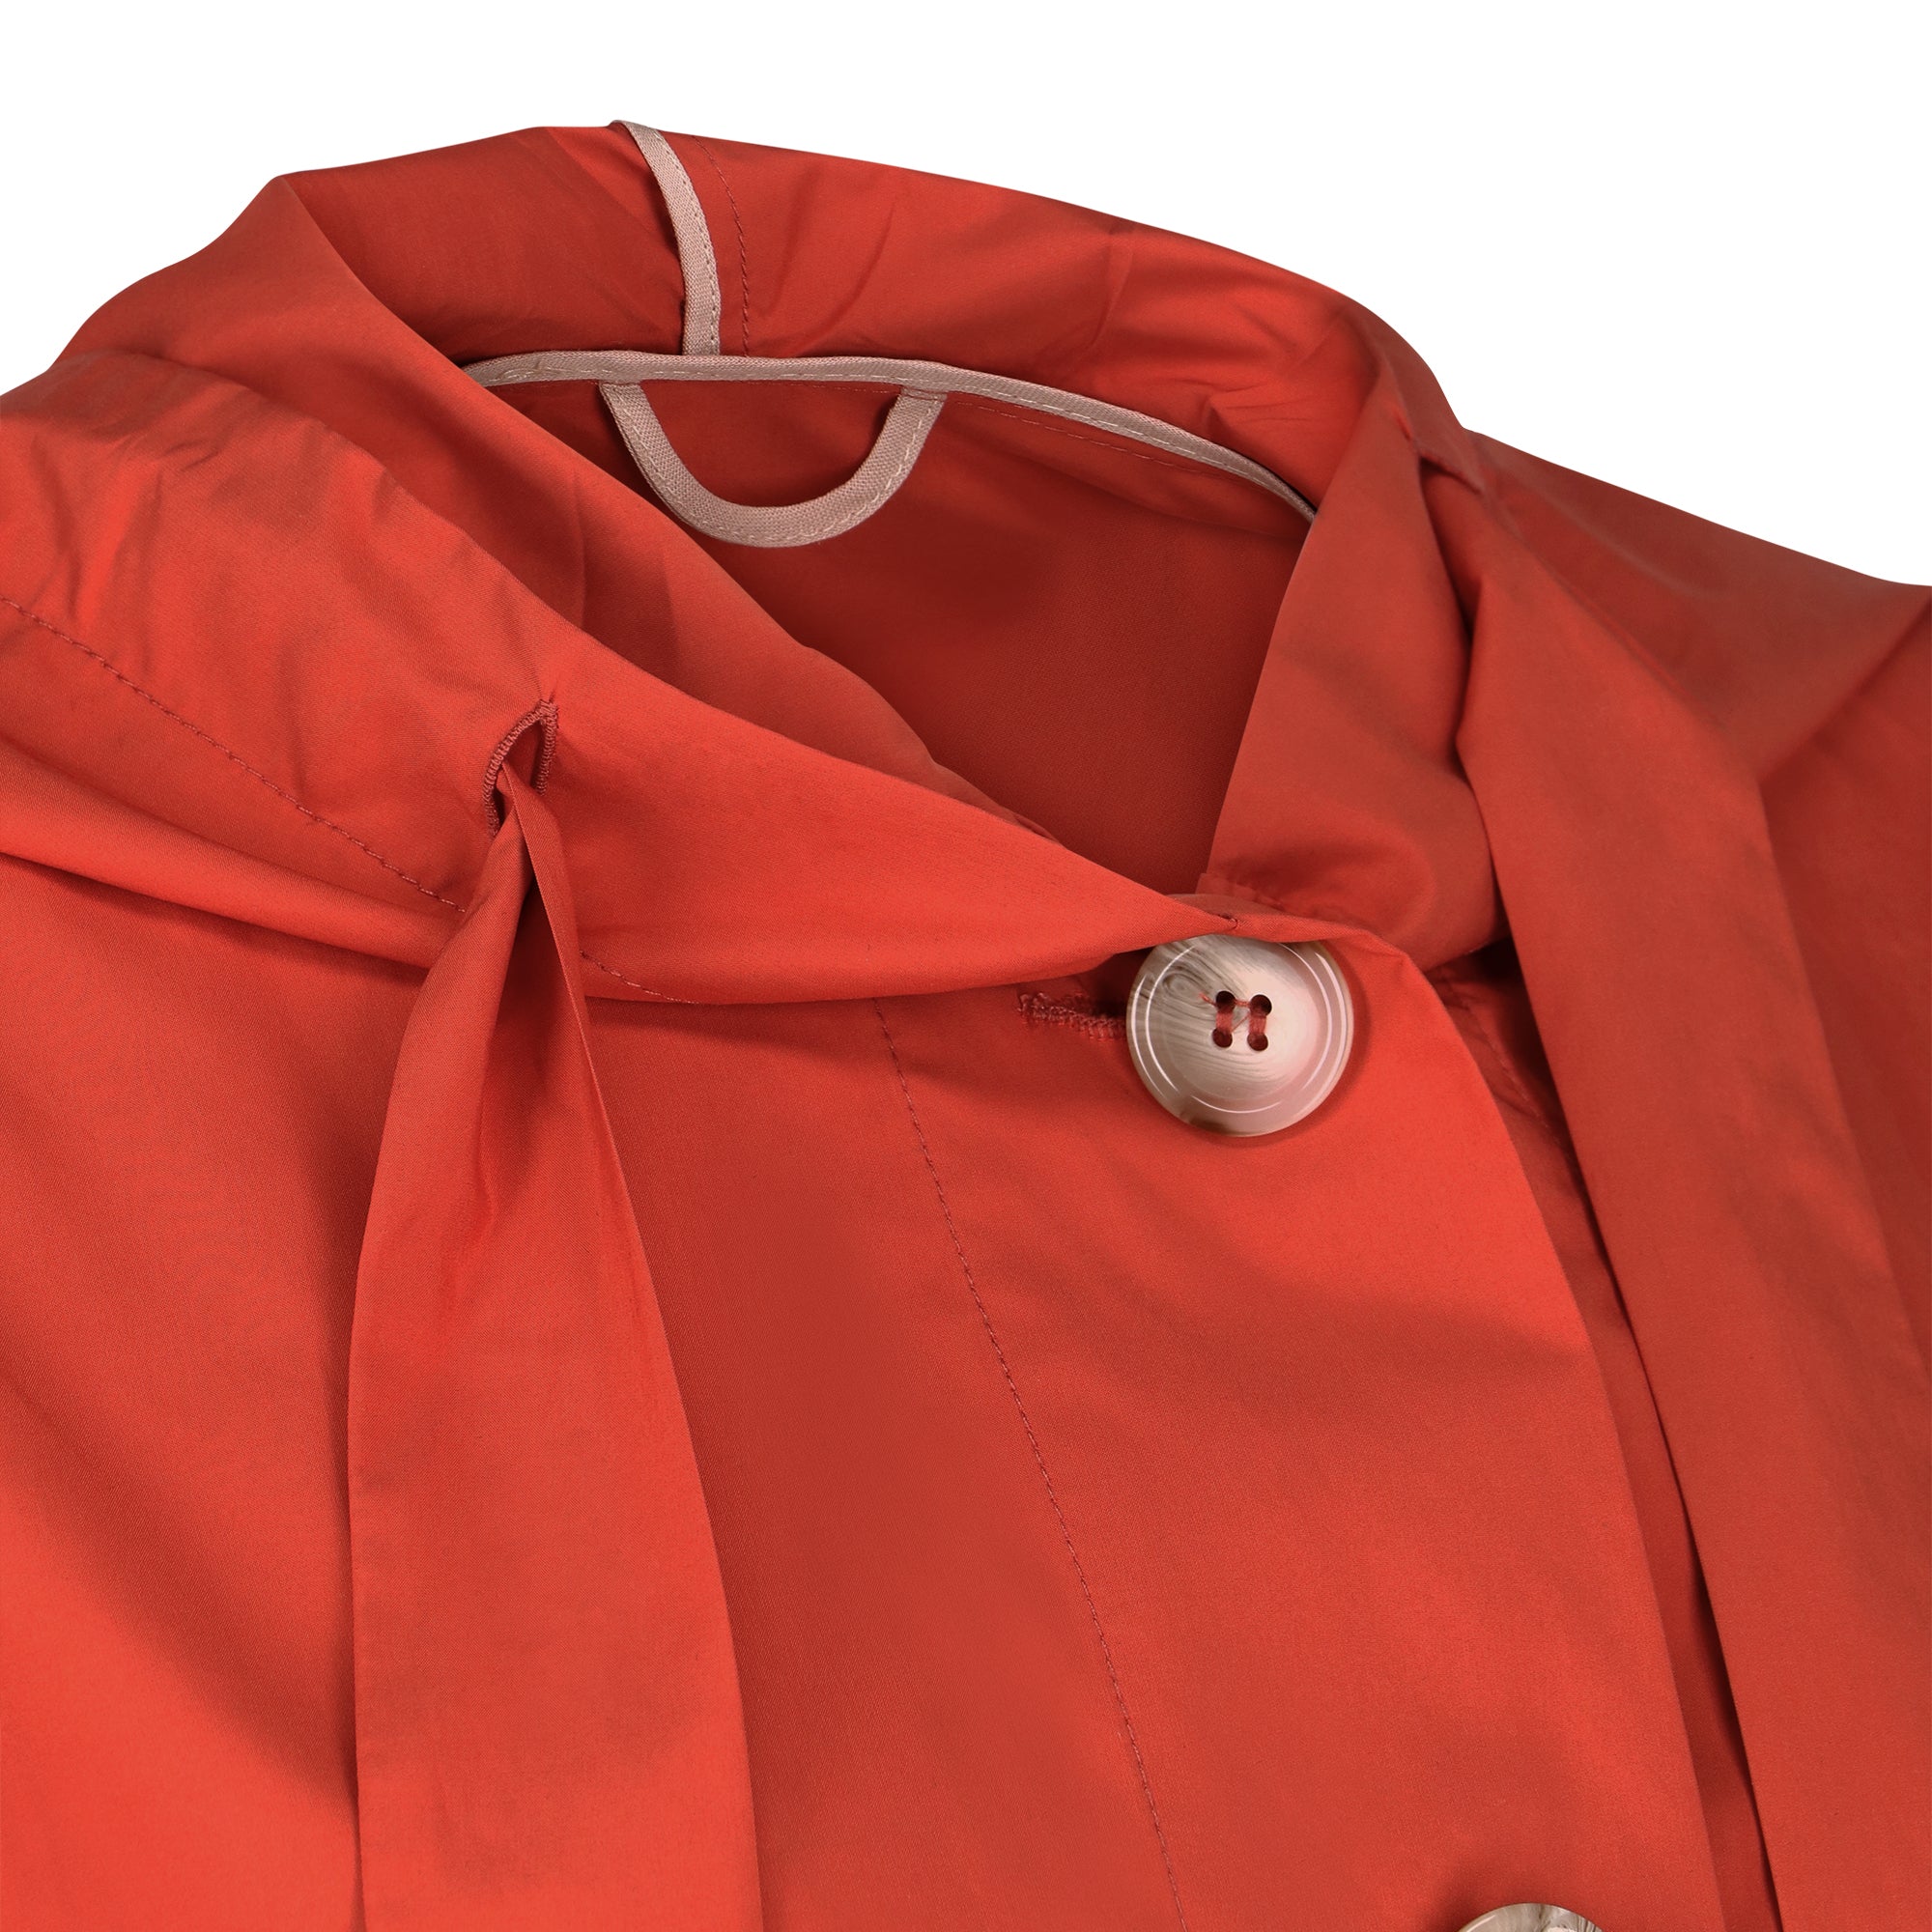 The classic raincoat - orange color - neckline details